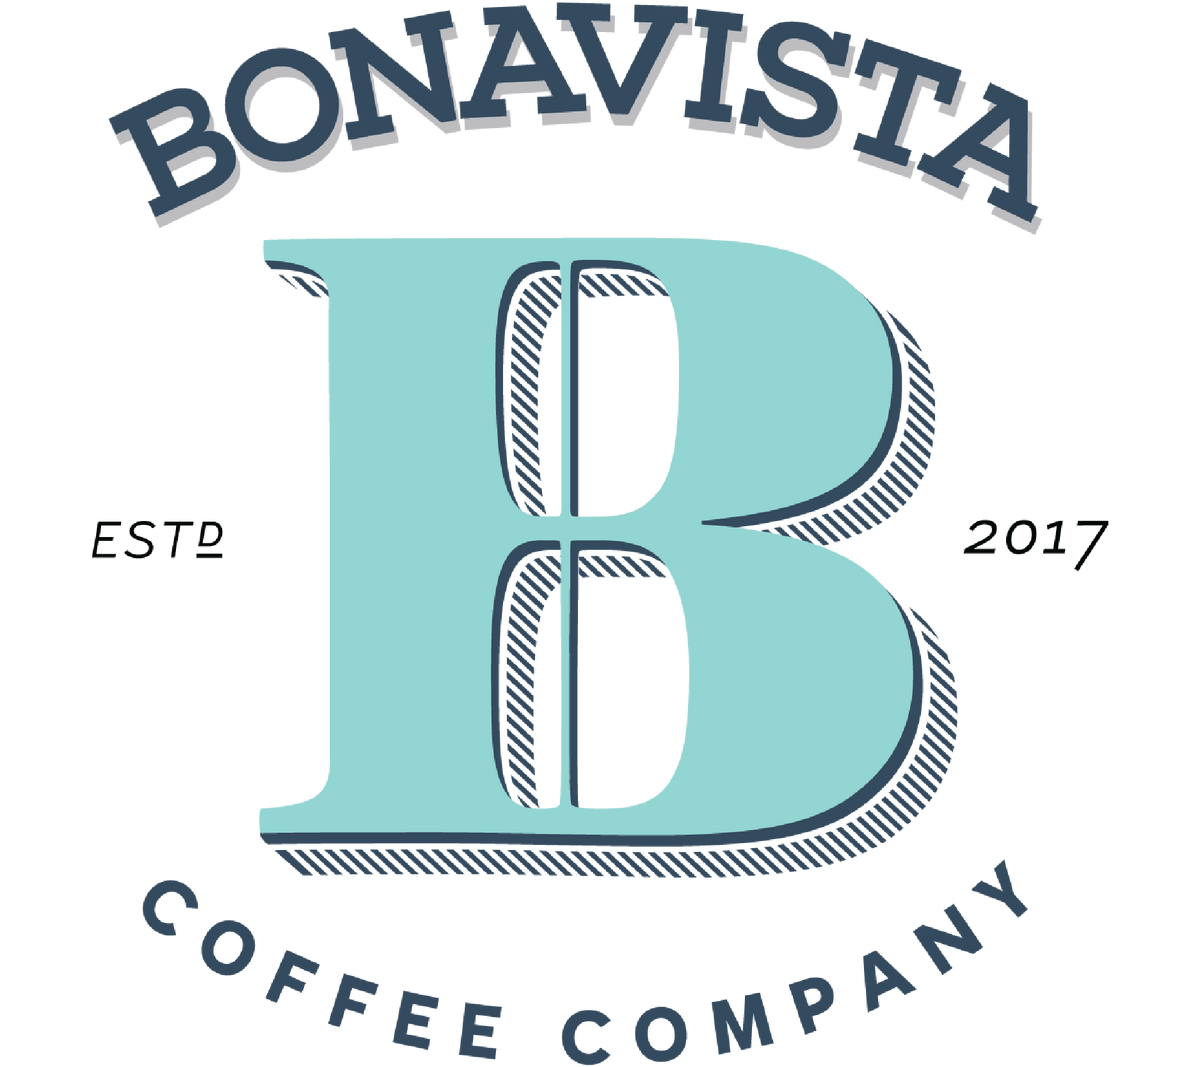 Bonavista Coffee Company